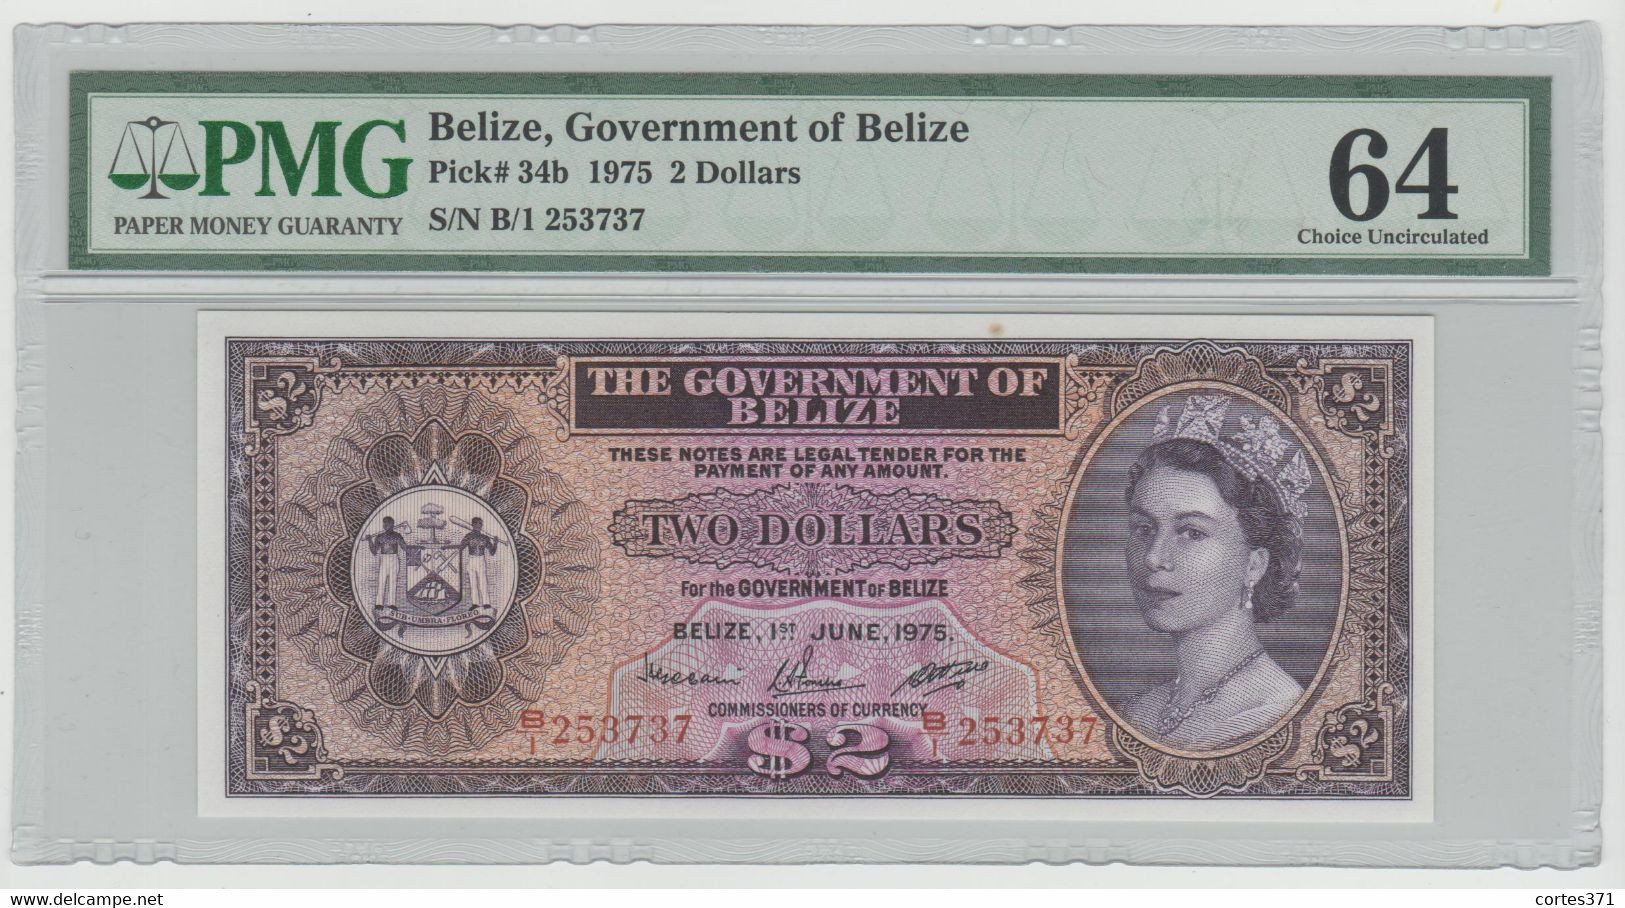 Belize 2 Dollars 1975 P-34b UNC - PMG 64 - Belice